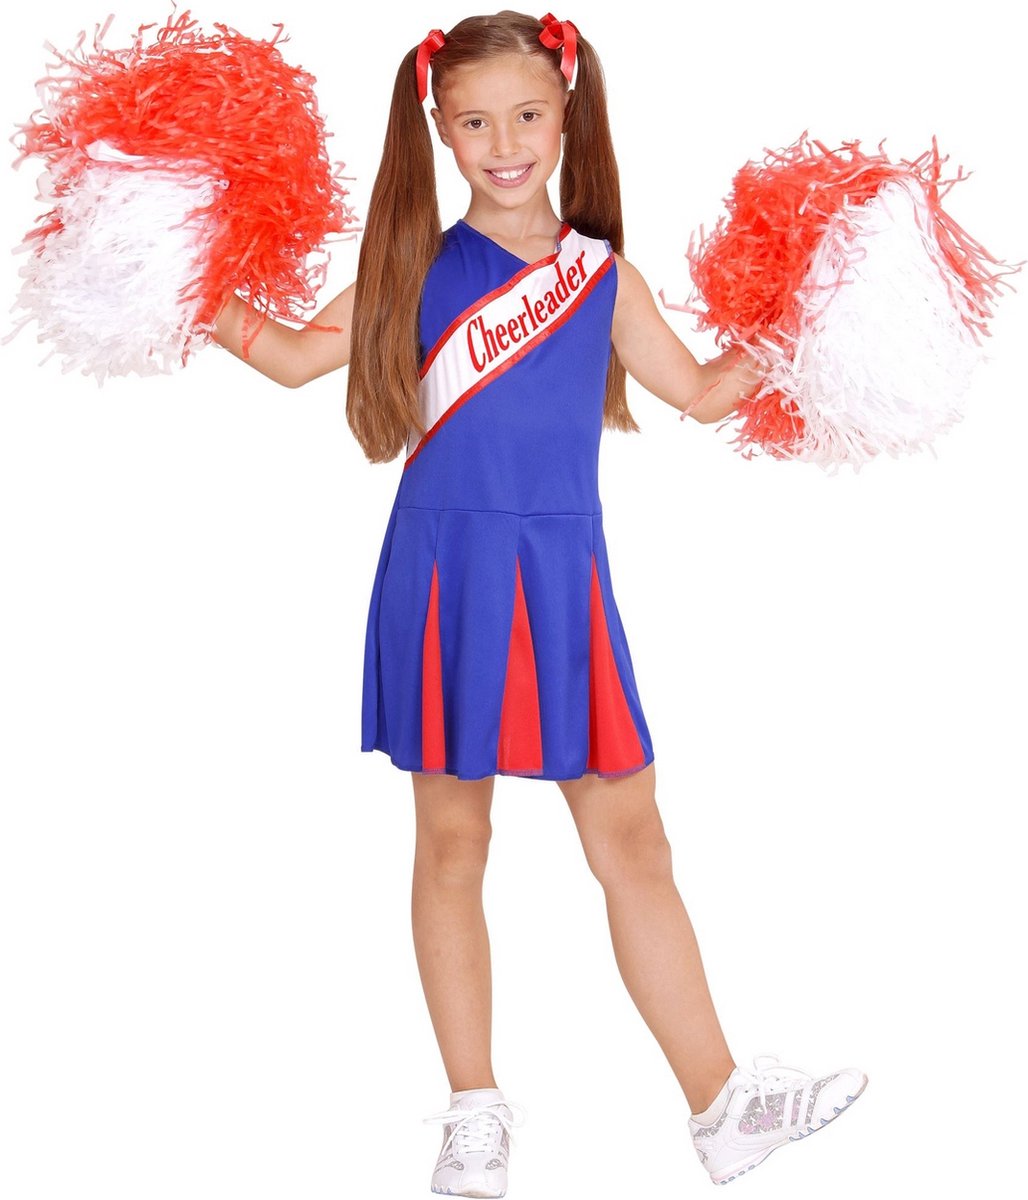 Widmann - Cheerleader Kostuum - Amerikaanse Cheerleader Blauw / Rood - Meisje - Blauw, Rood - Maat 104 - Carnavalskleding - Verkleedkleding